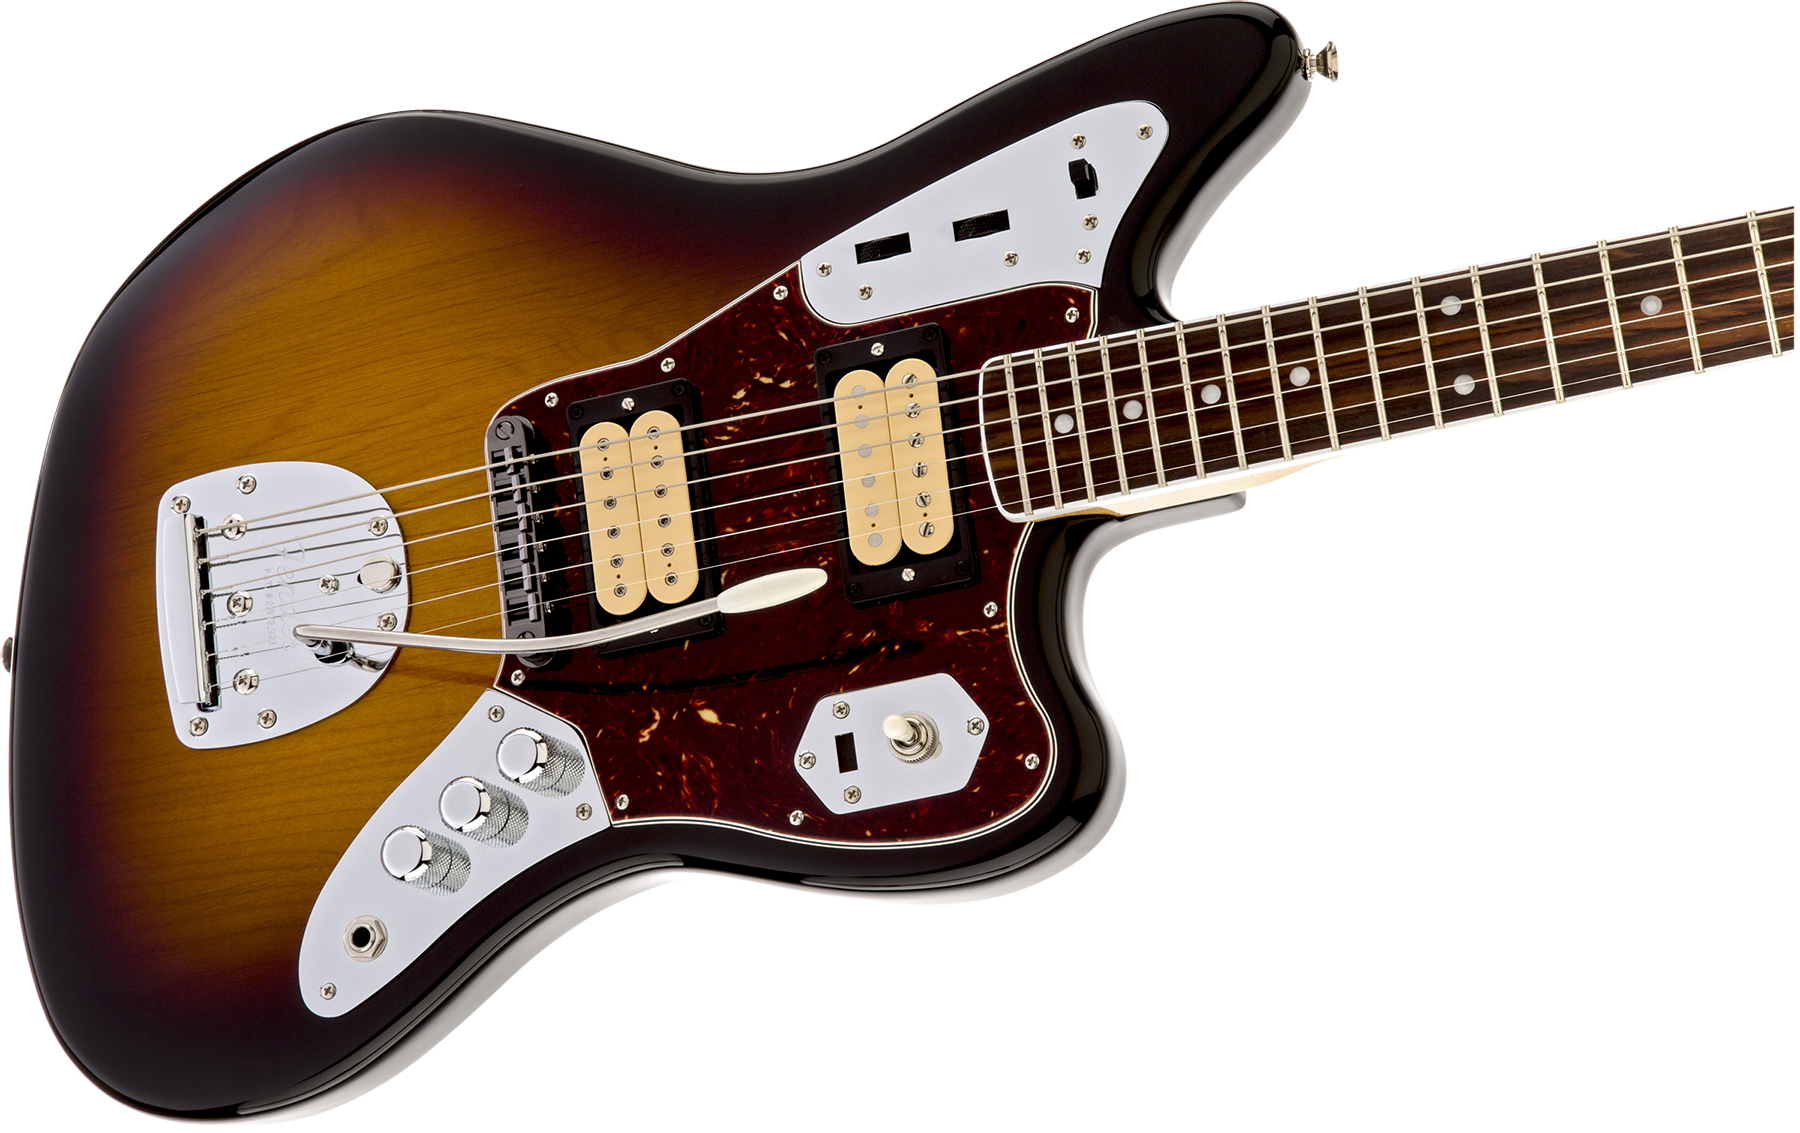 Fender Kurt Cobain Jaguar Mex Hh Trem Rw - 3-color Sunburst - Retro rock electric guitar - Variation 2